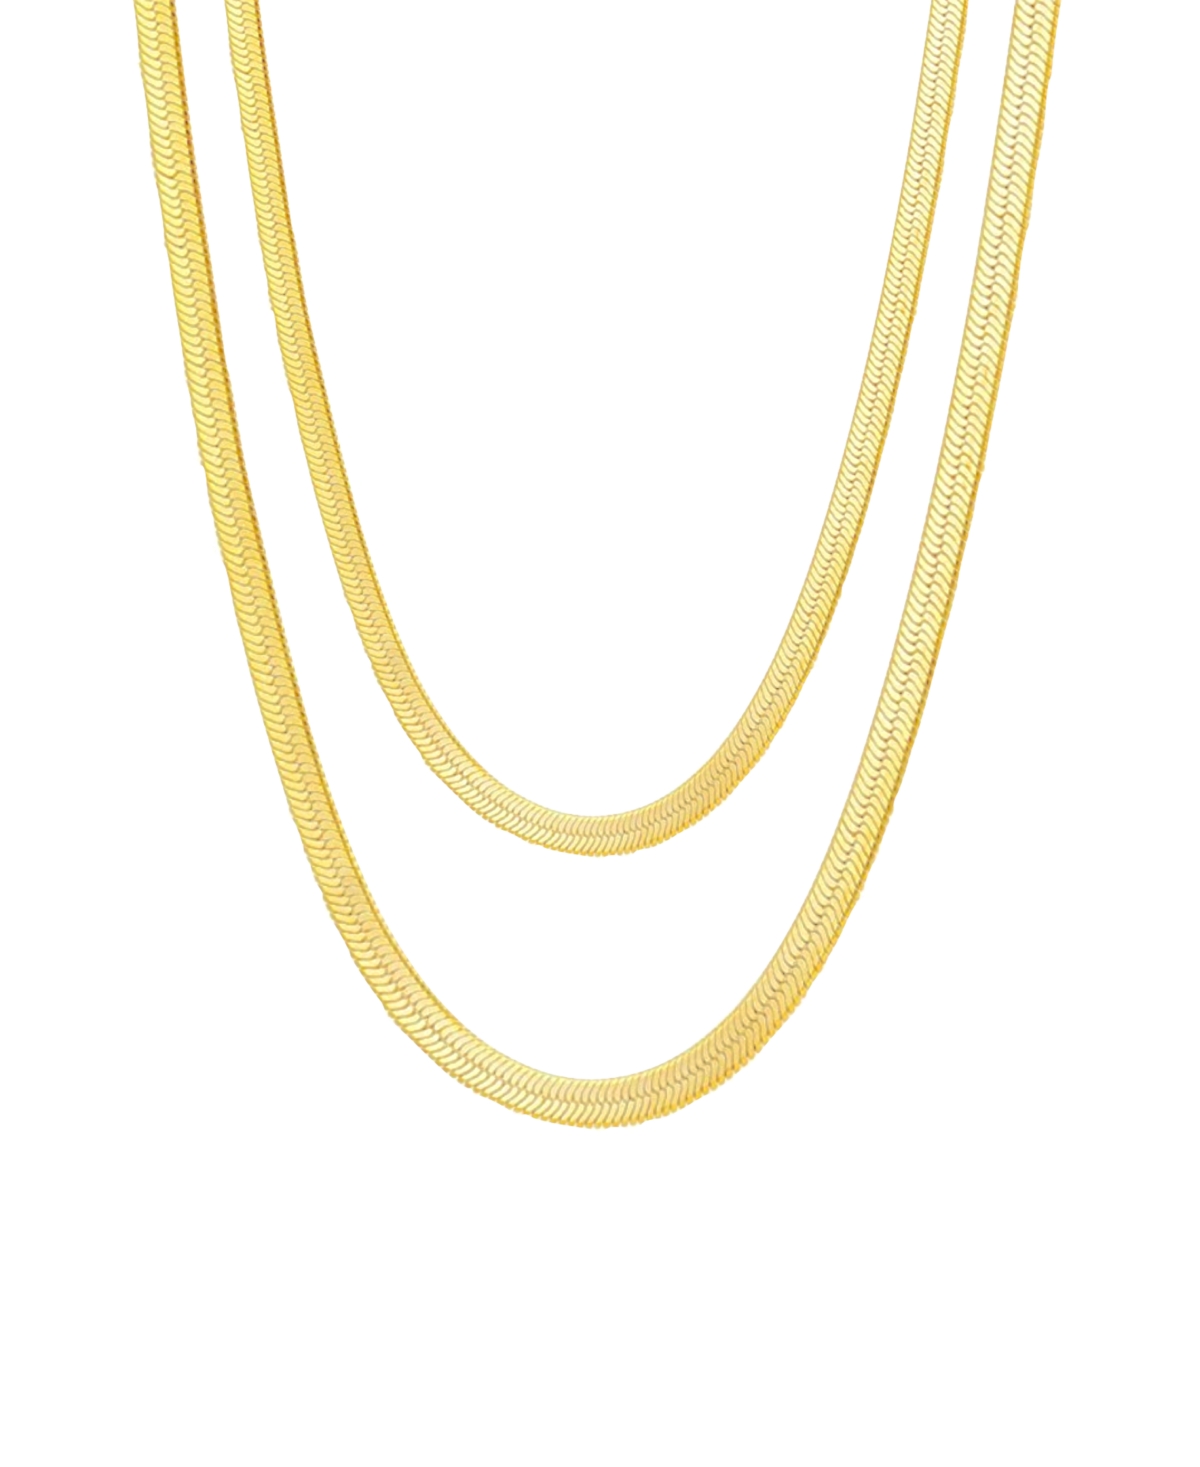 Ben Oni Maelle 2 Pieces Herringbone Necklace Set In Gold